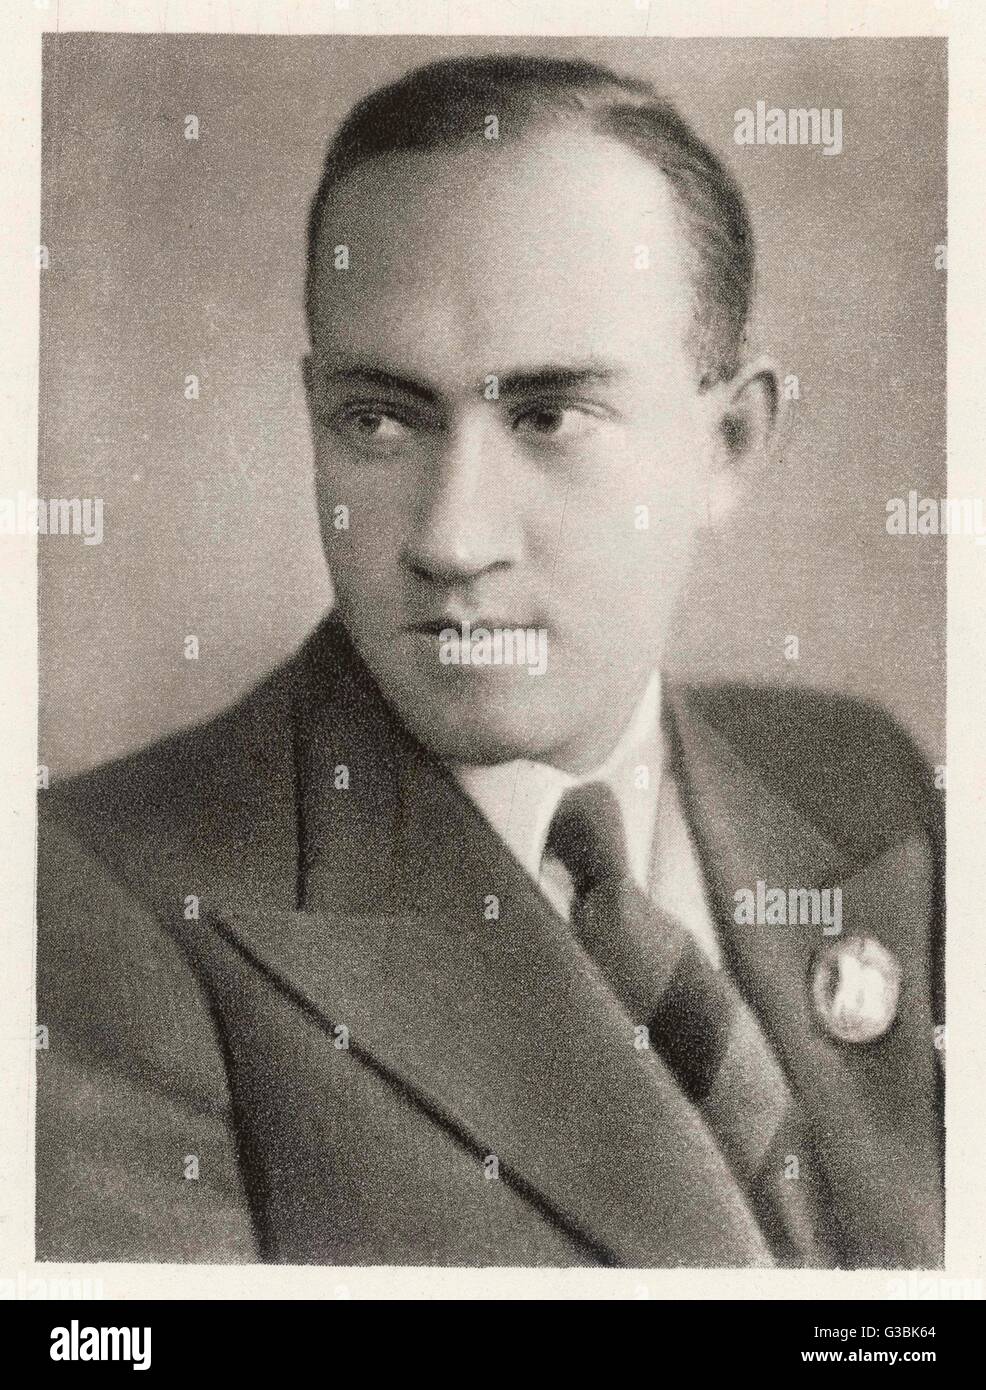 DAVID OISTRAKH  Russian violinist        Date: 1908 - 1974 Stock Photo